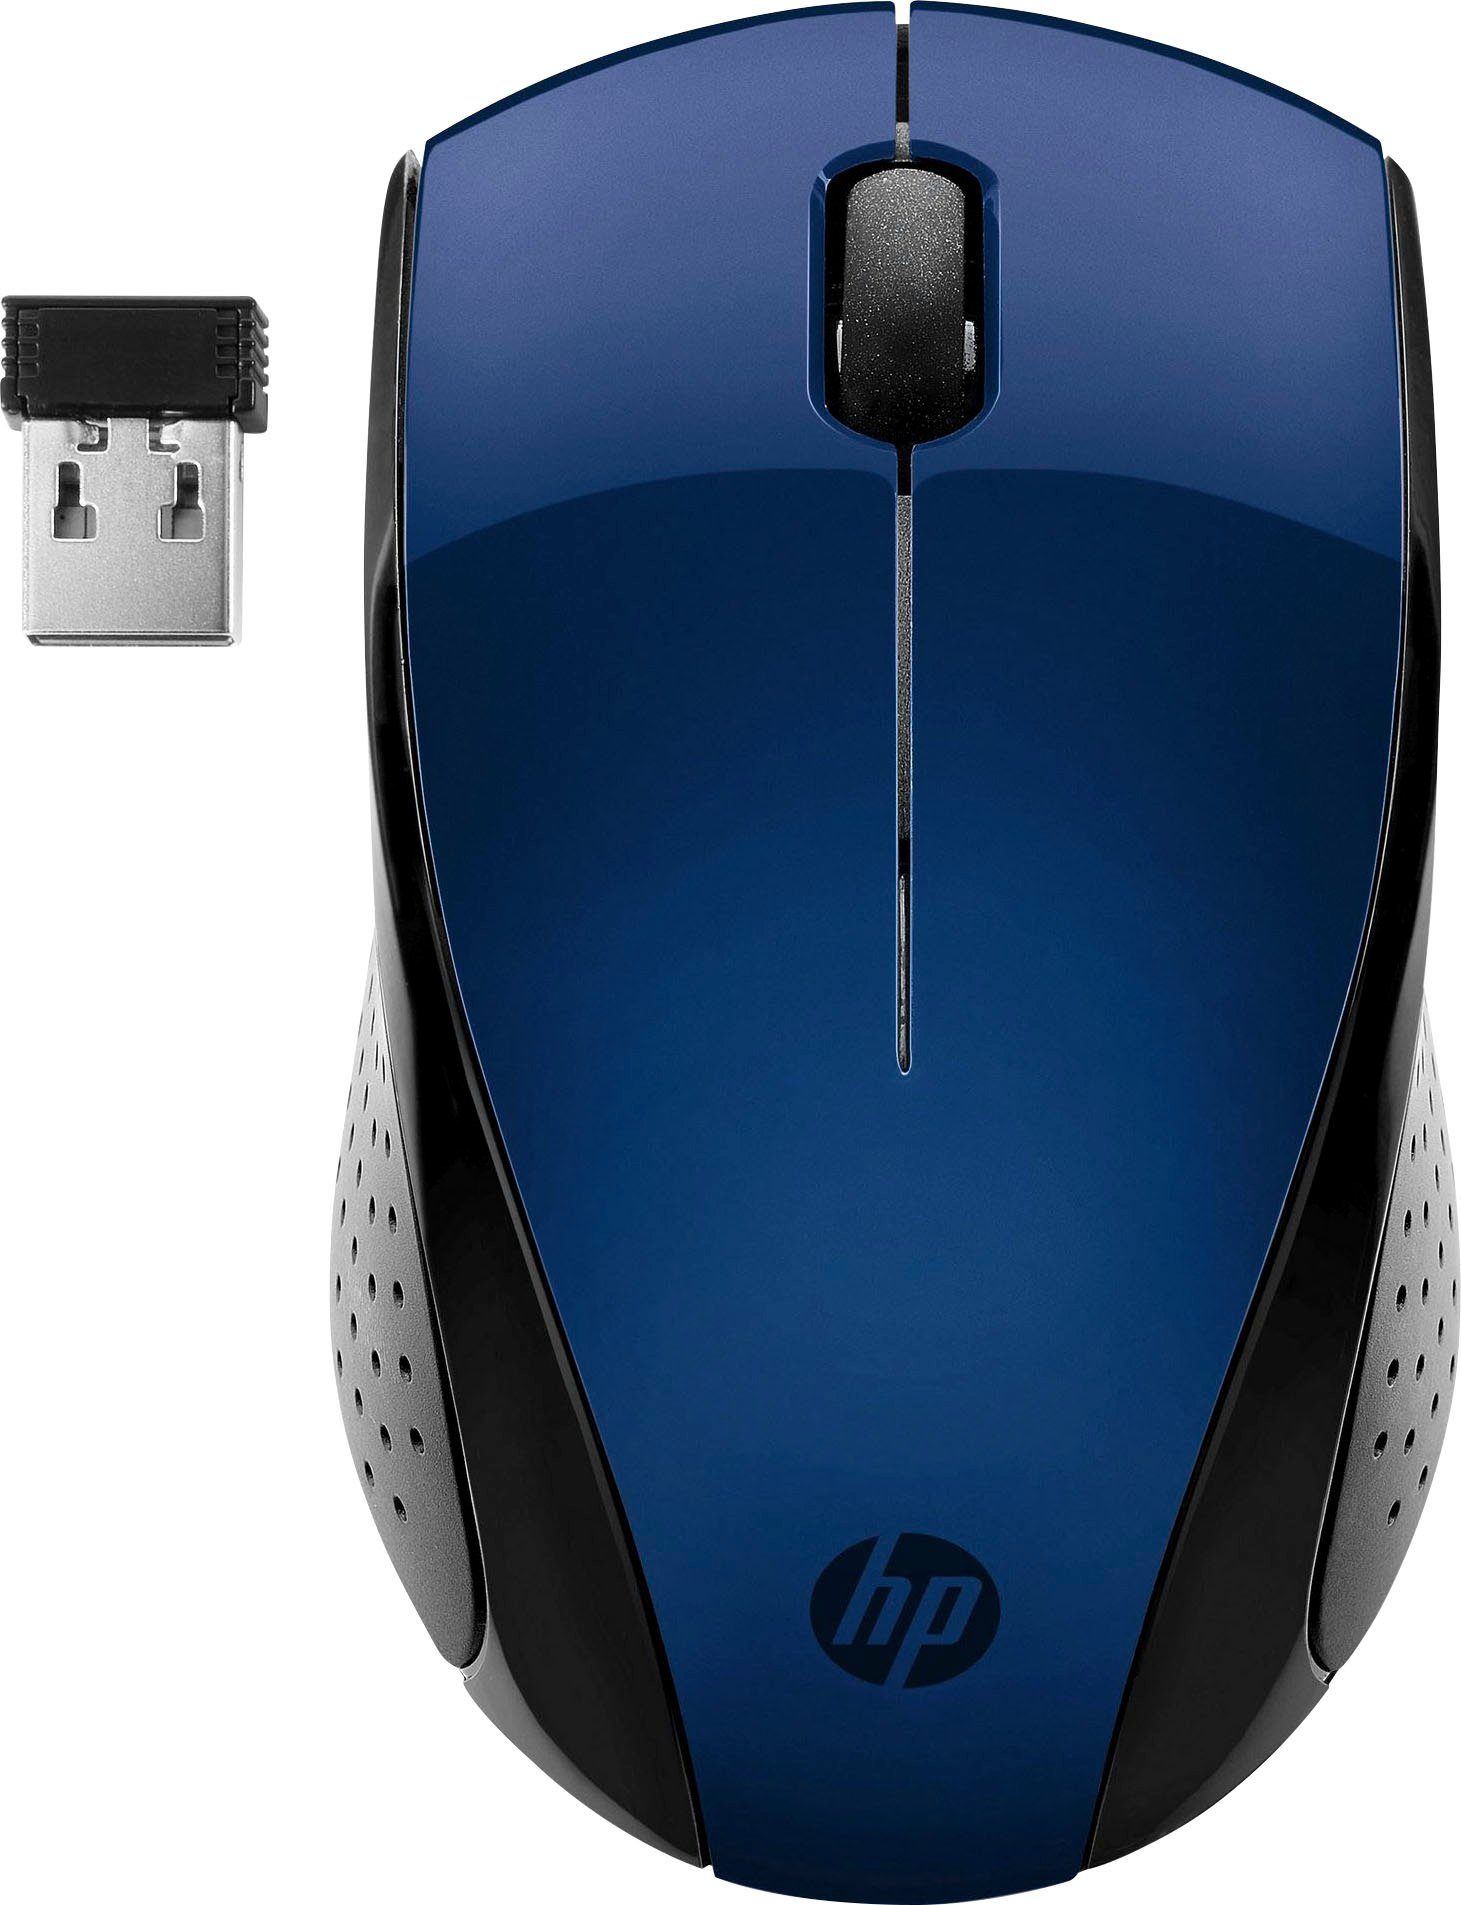 [Sieht elegant aus] Maus 220 (Funk) Wireless blau/blau HP Mouse